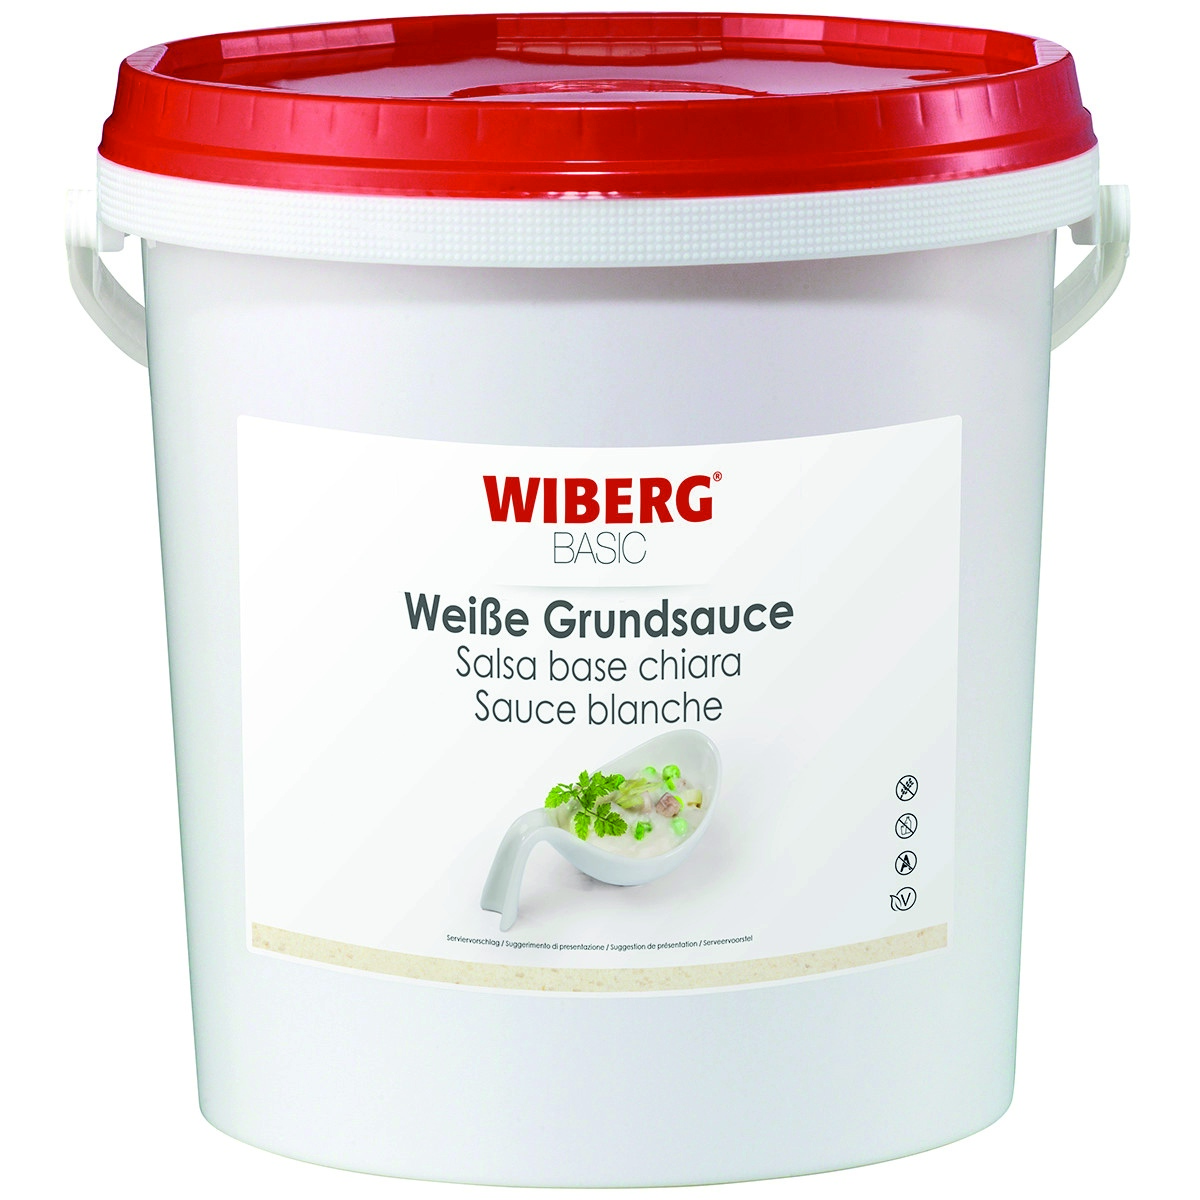 WIBERG BASIC Weiße Grundsauce